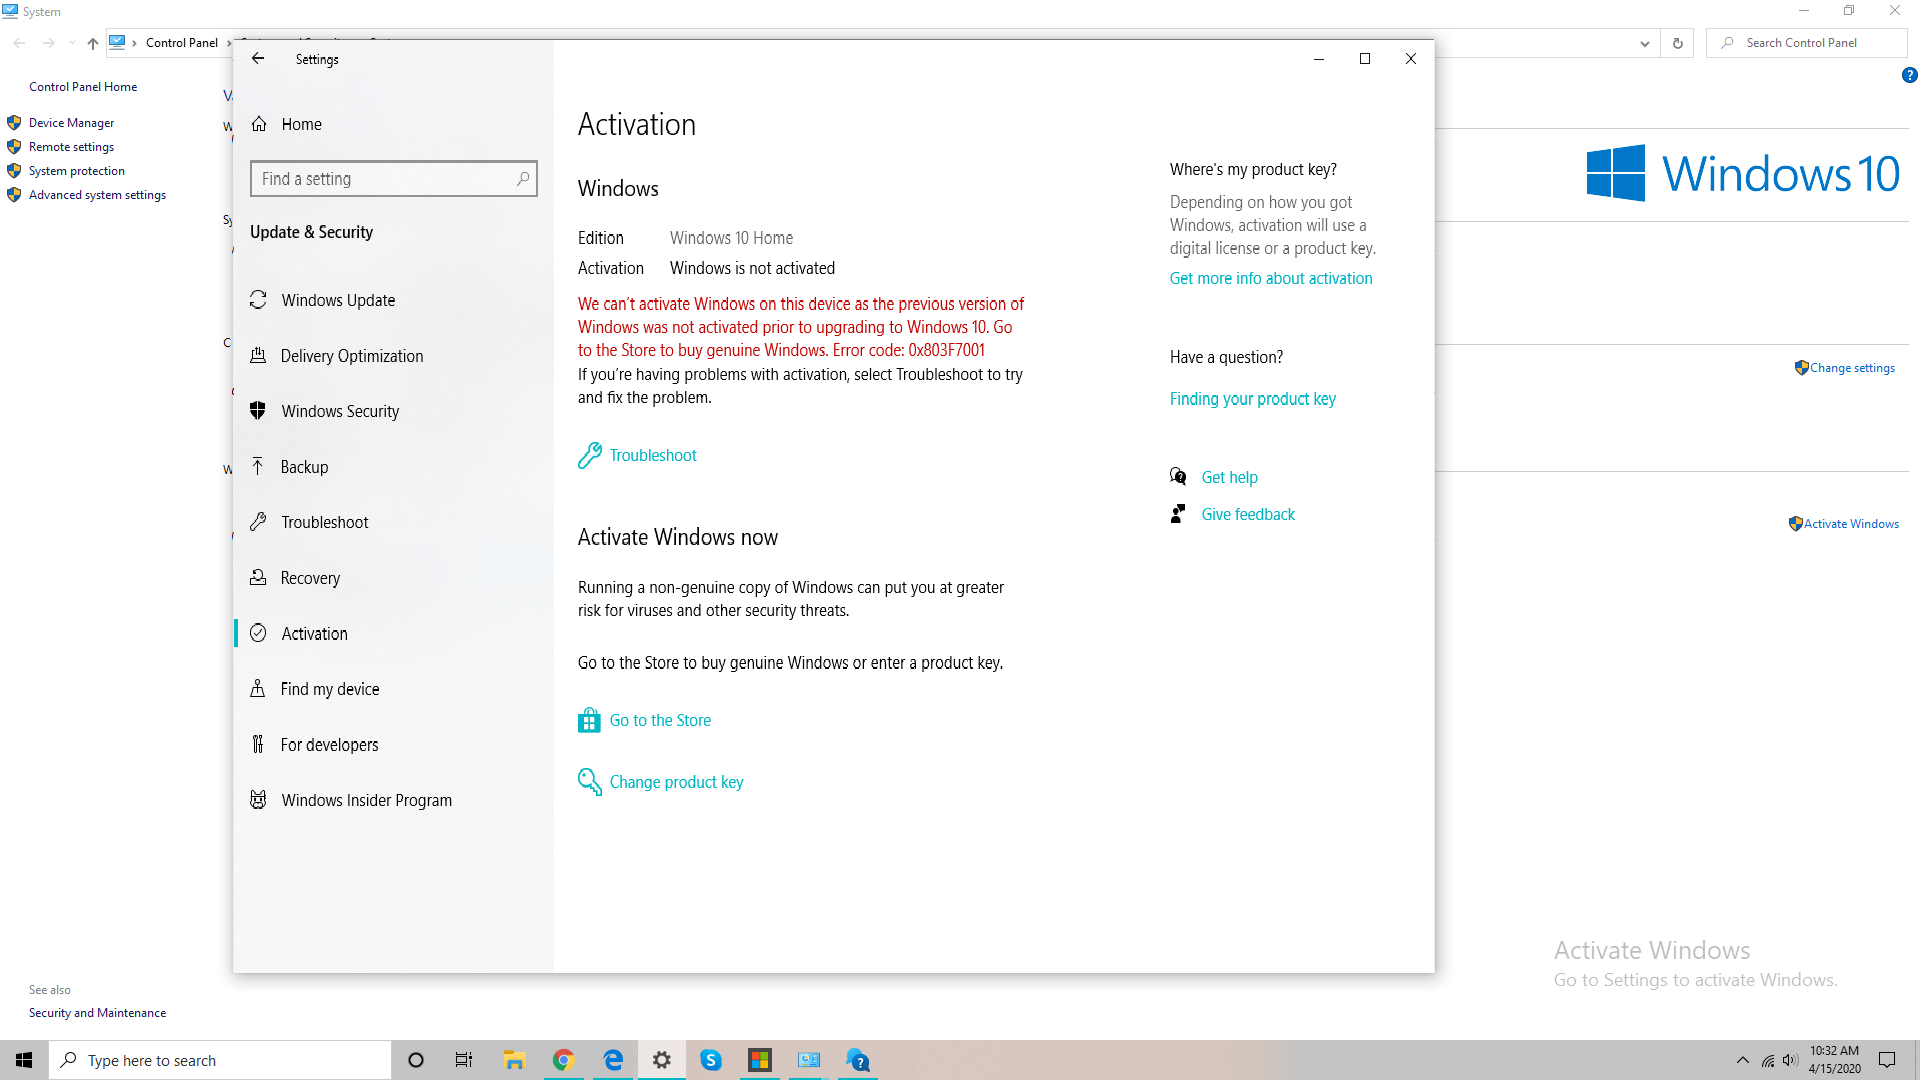 Windows 10 Home - Activation b76d640c-5f78-4cf2-a400-2b24edd73b40?upload=true.png